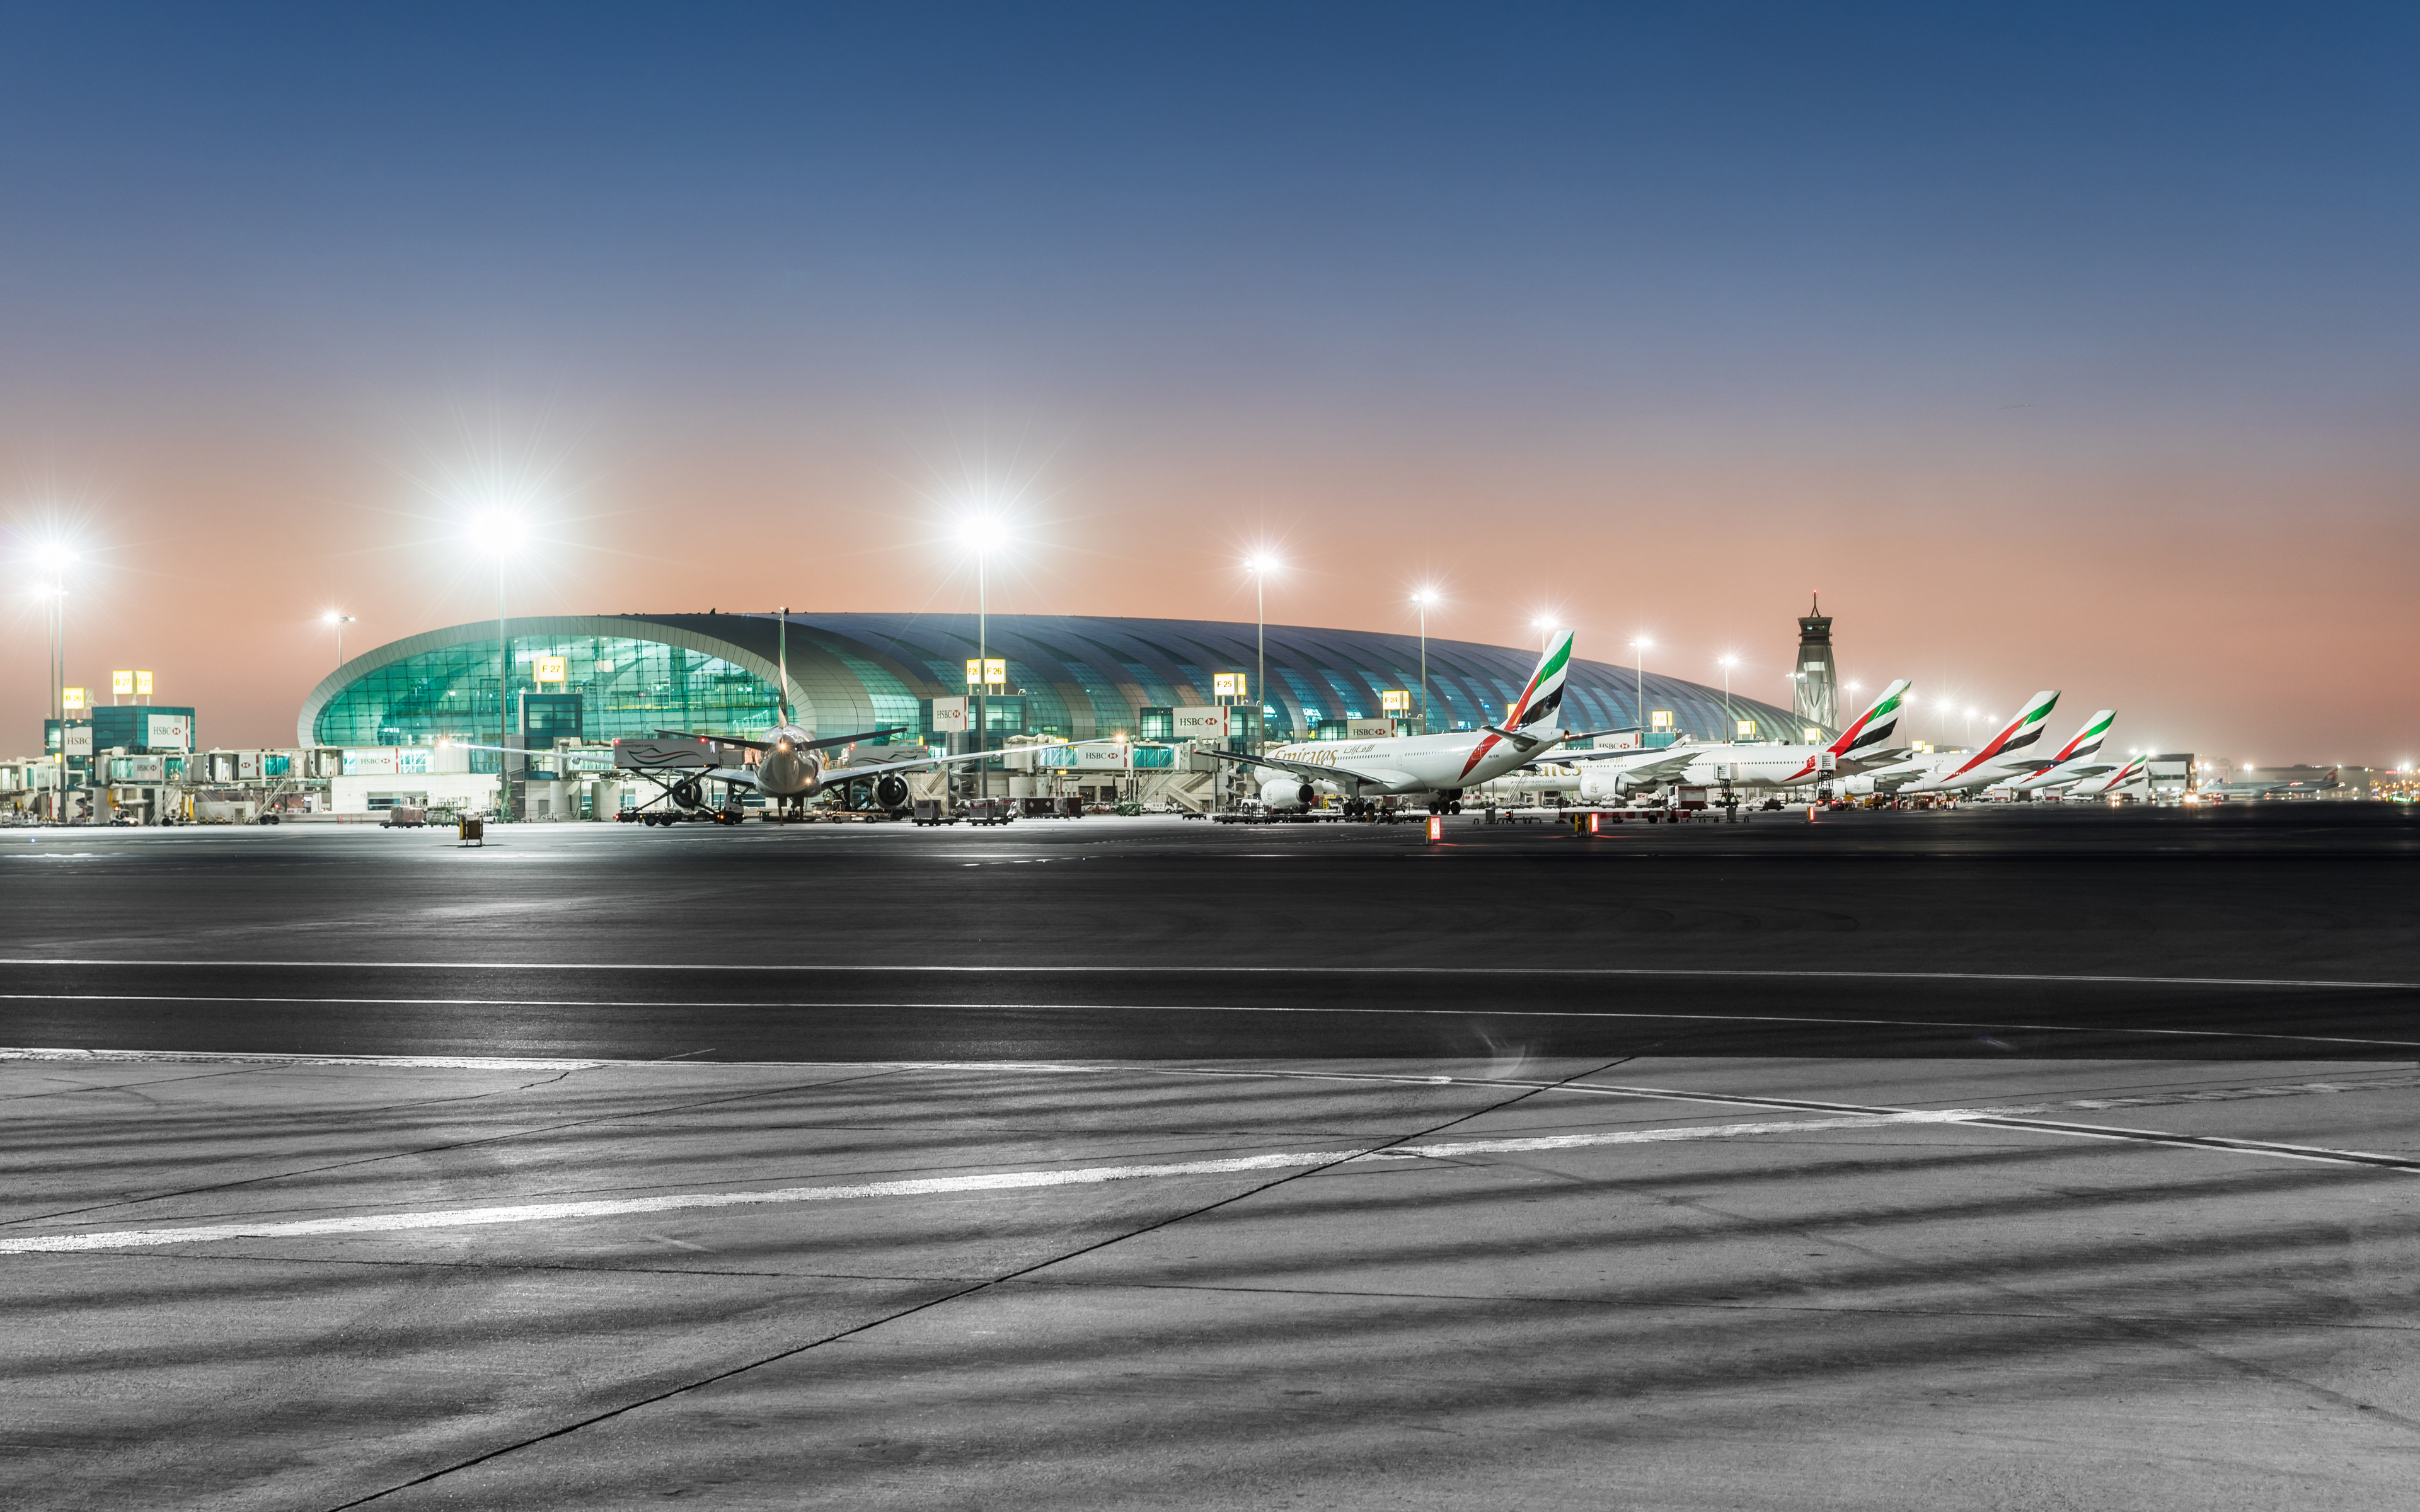 Download wallpaper Dubai International Airport, 4k, night, passenger aircraft, Dubai, UAE for desktop with resolution 3840x2400. High Quality HD picture wallpaper